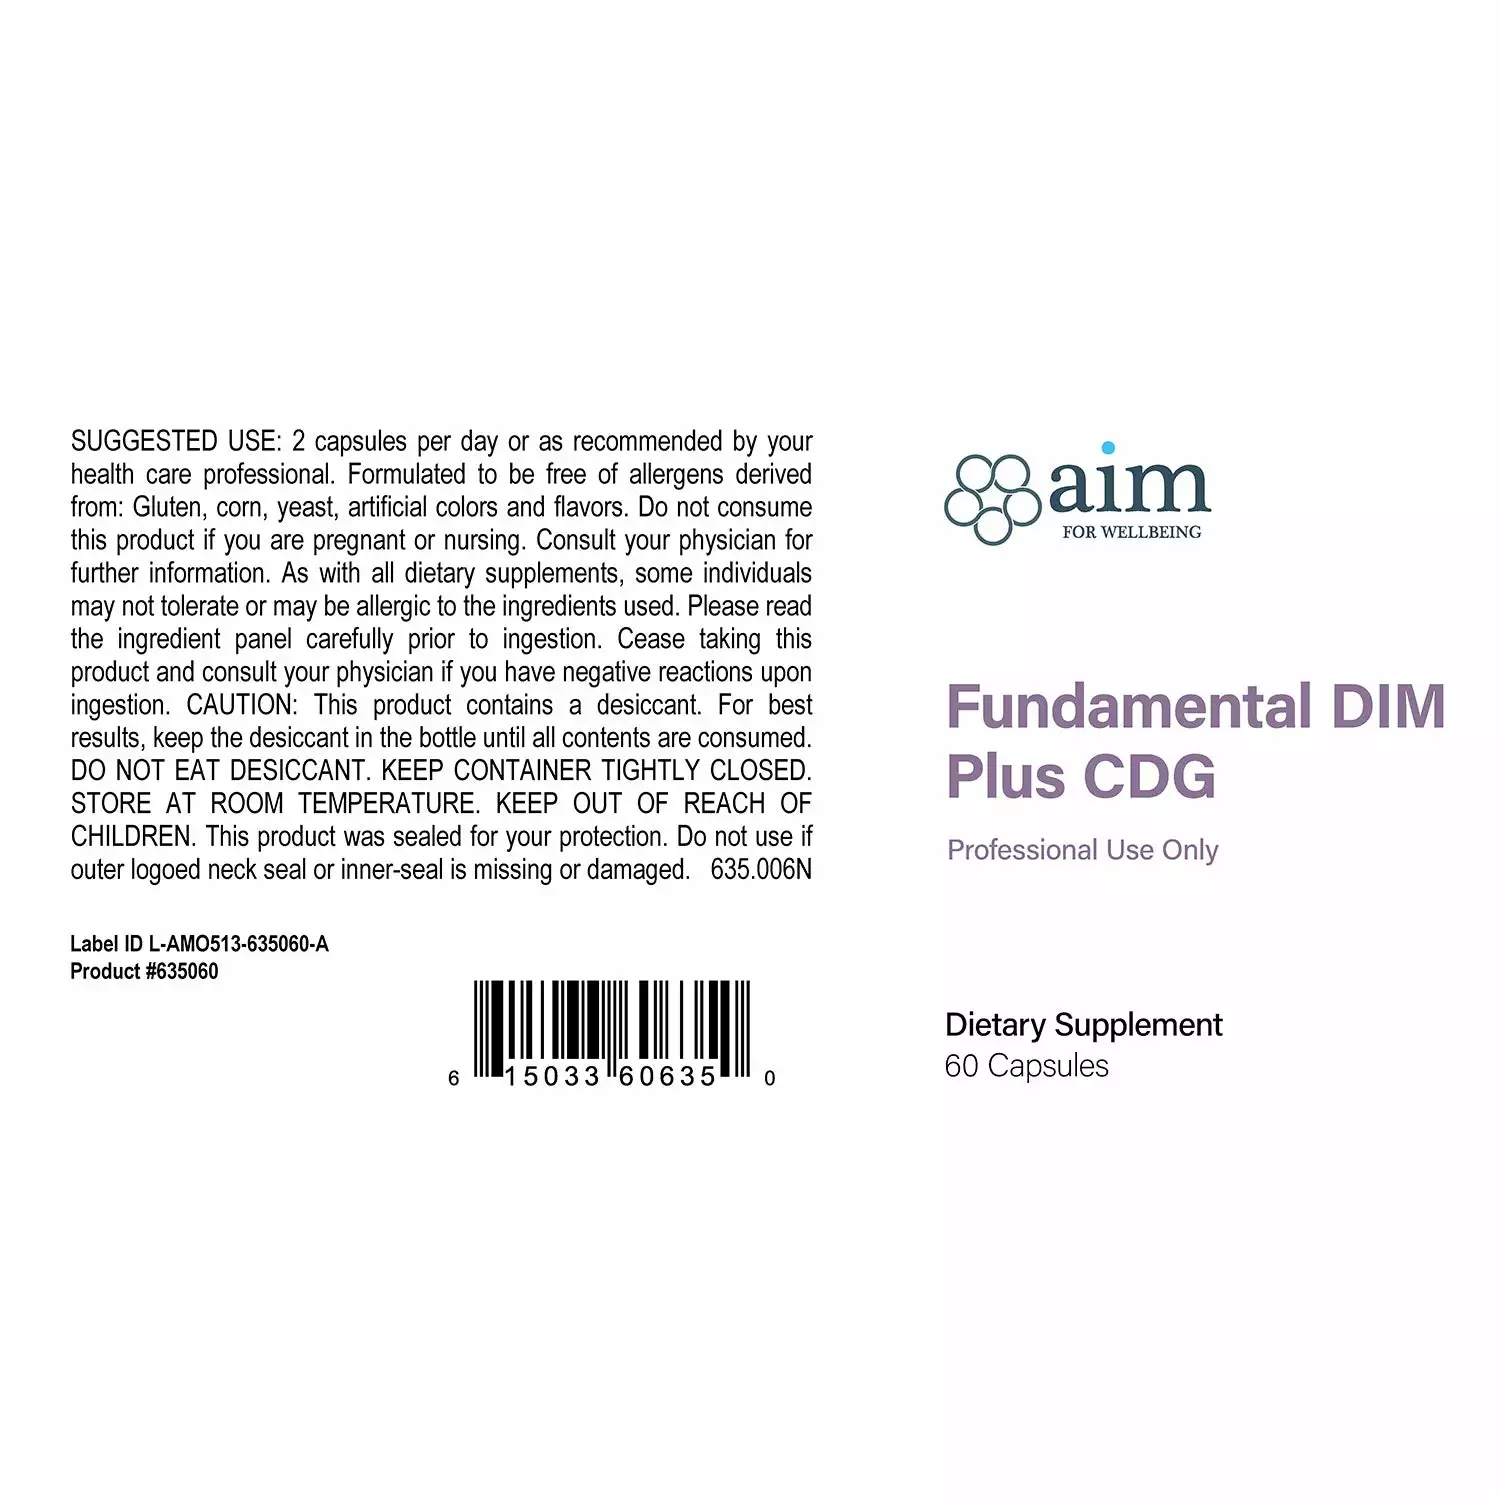 Fundamental DIM Plus CDG